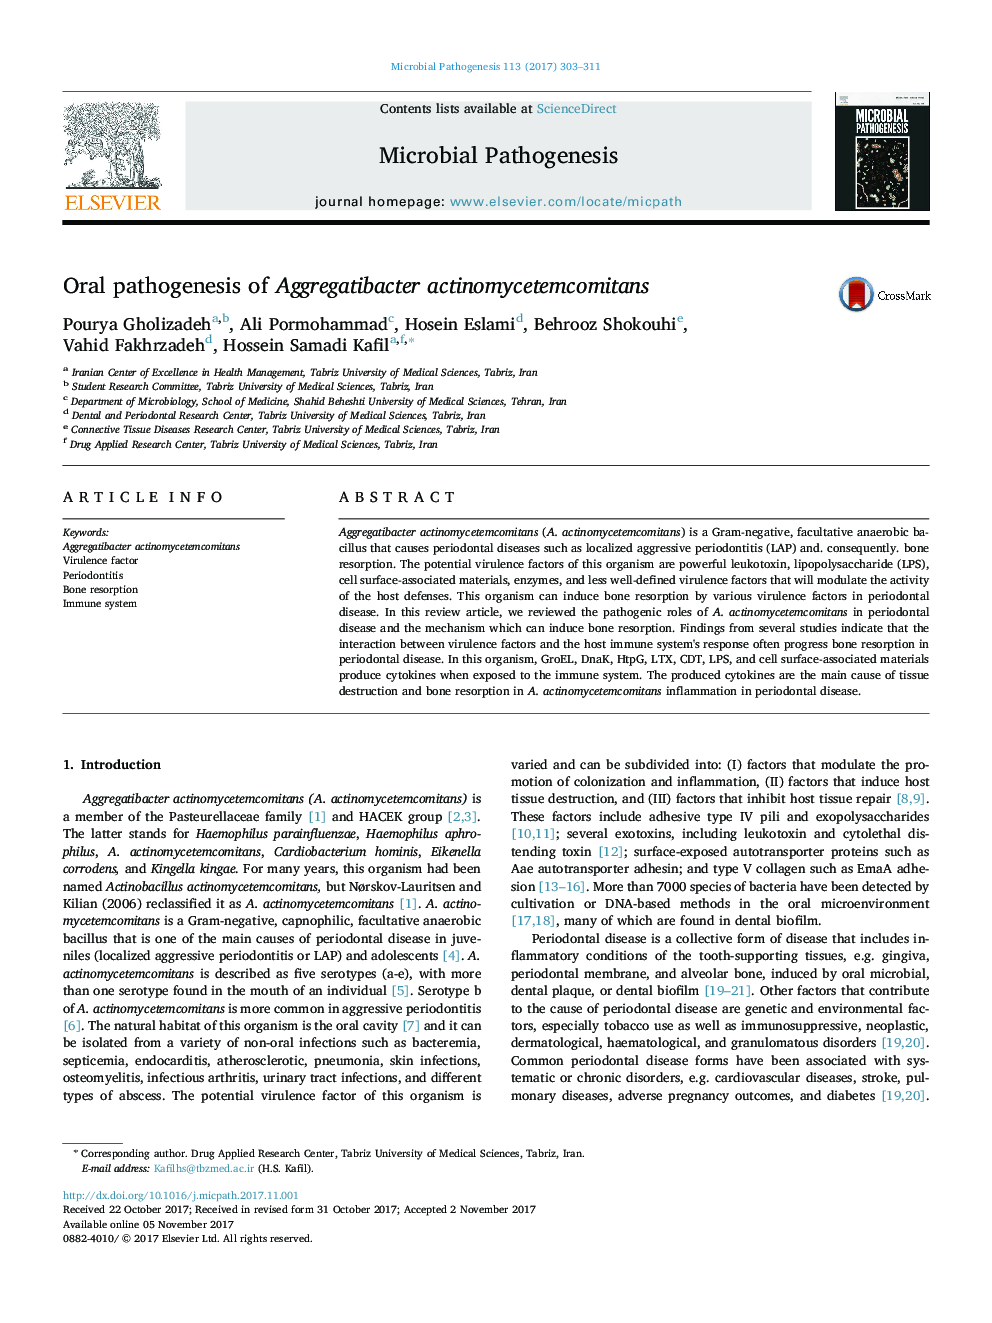 Oral pathogenesis of Aggregatibacter actinomycetemcomitans